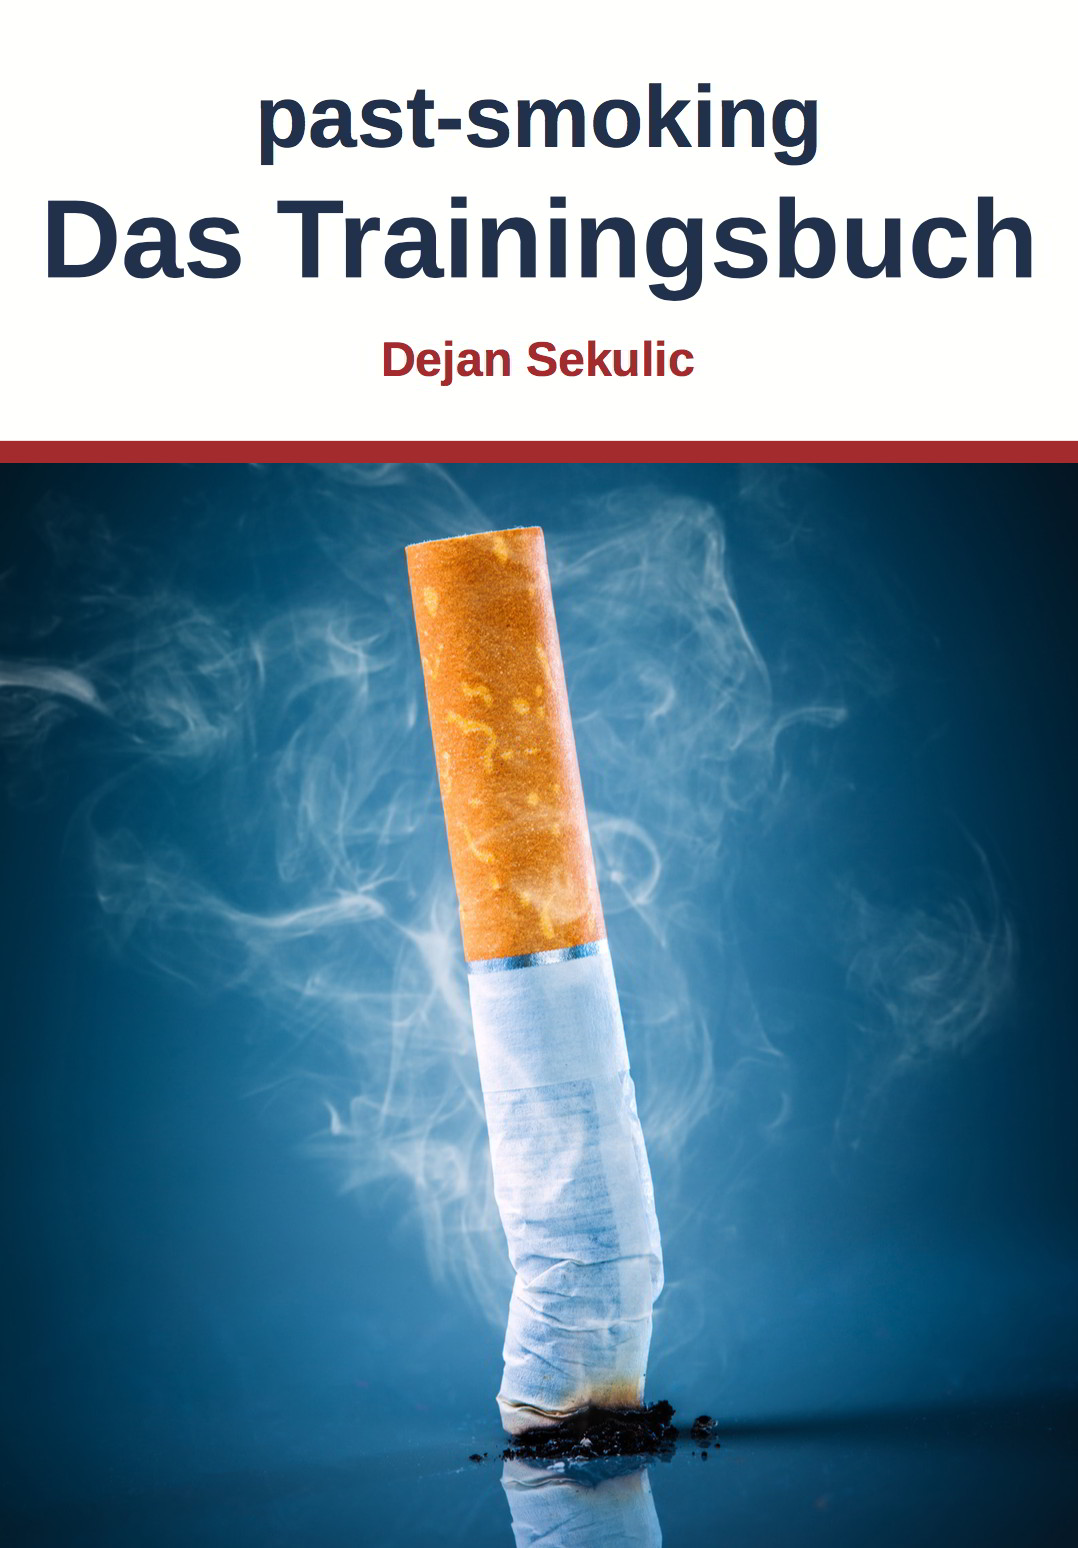 past-smoking - Das Trainingsbuch 